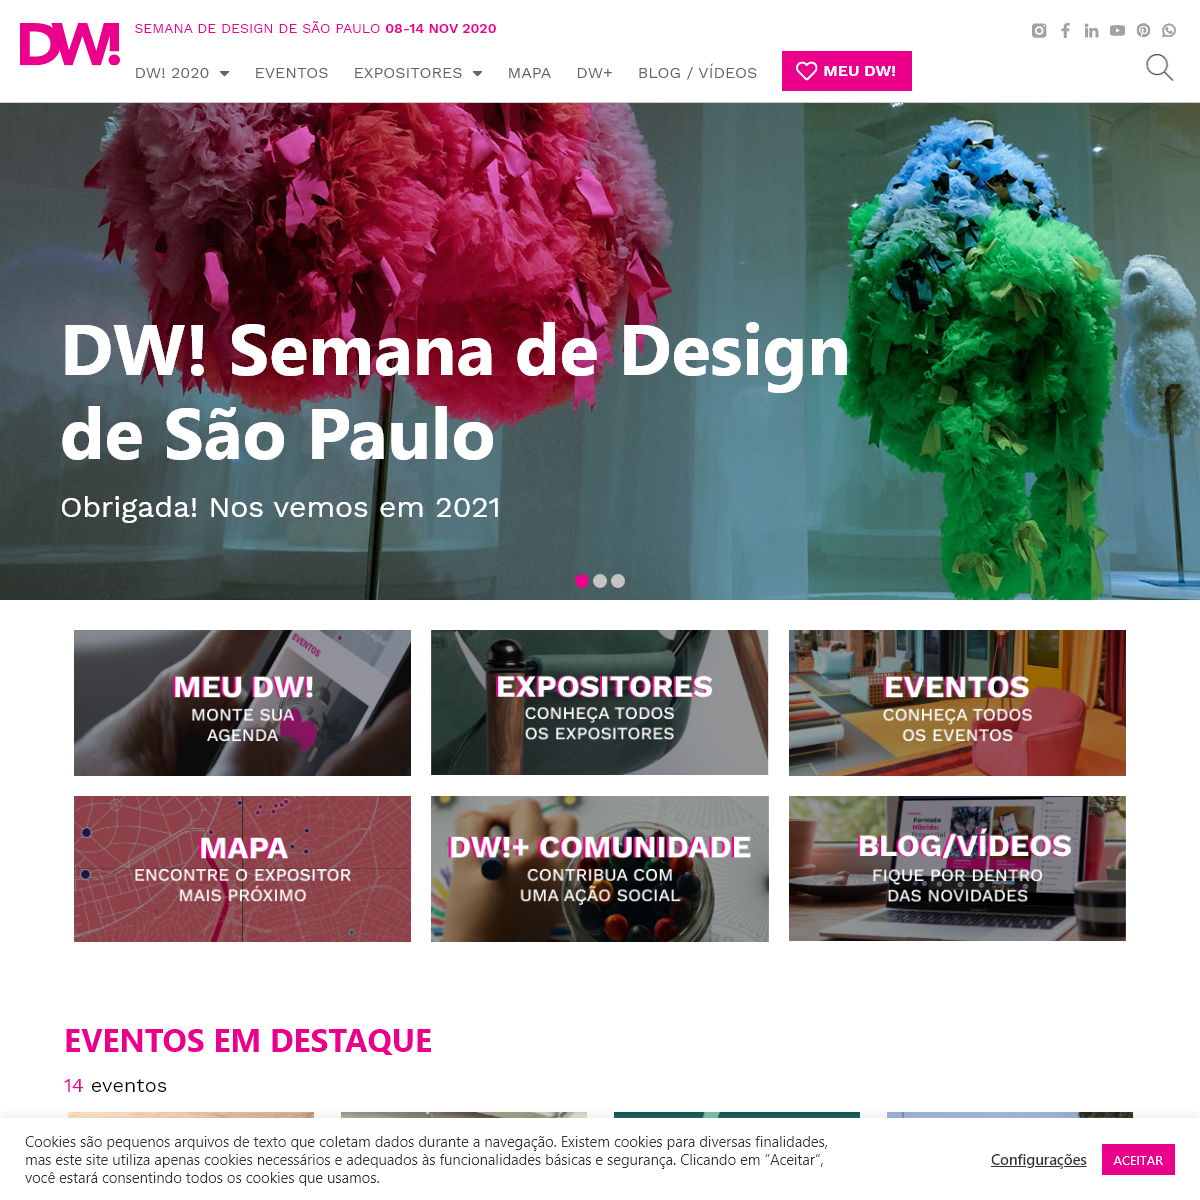 A complete backup of designweekend.com.br